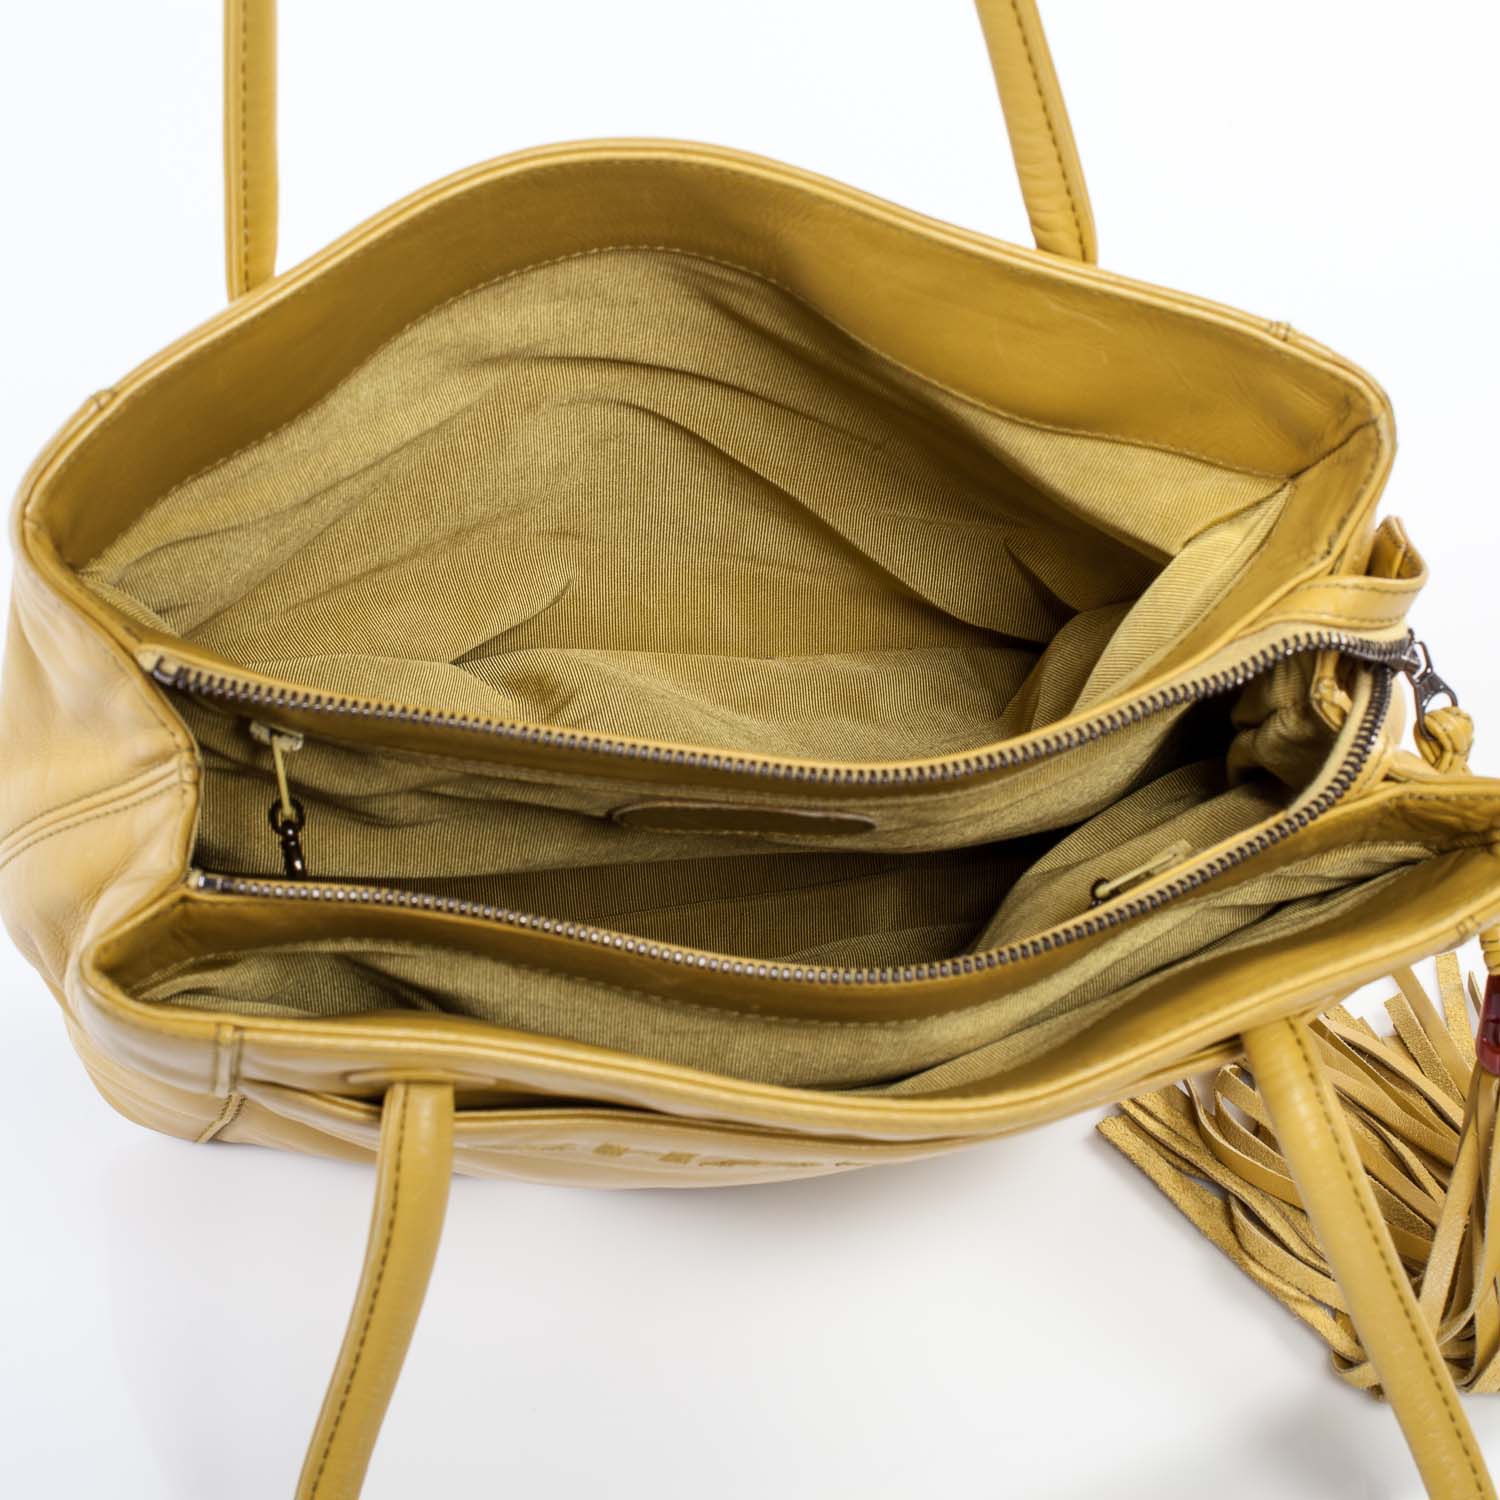 CHANEL Leather Tassel Bag Yellow 35925